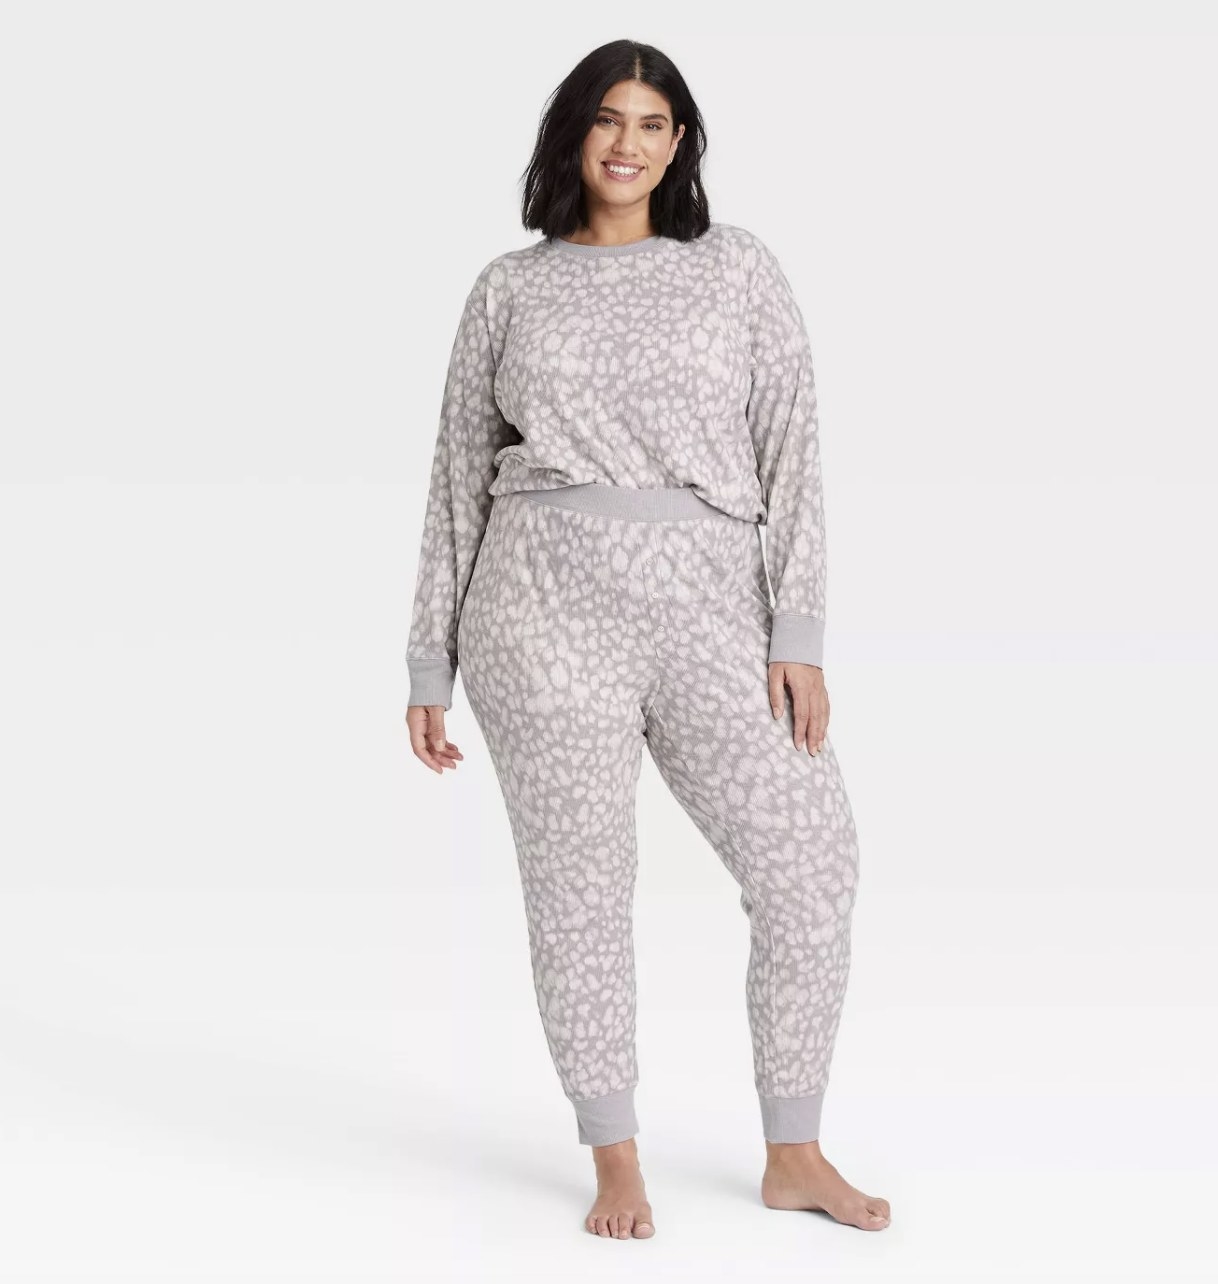 the pajama set in white leopard